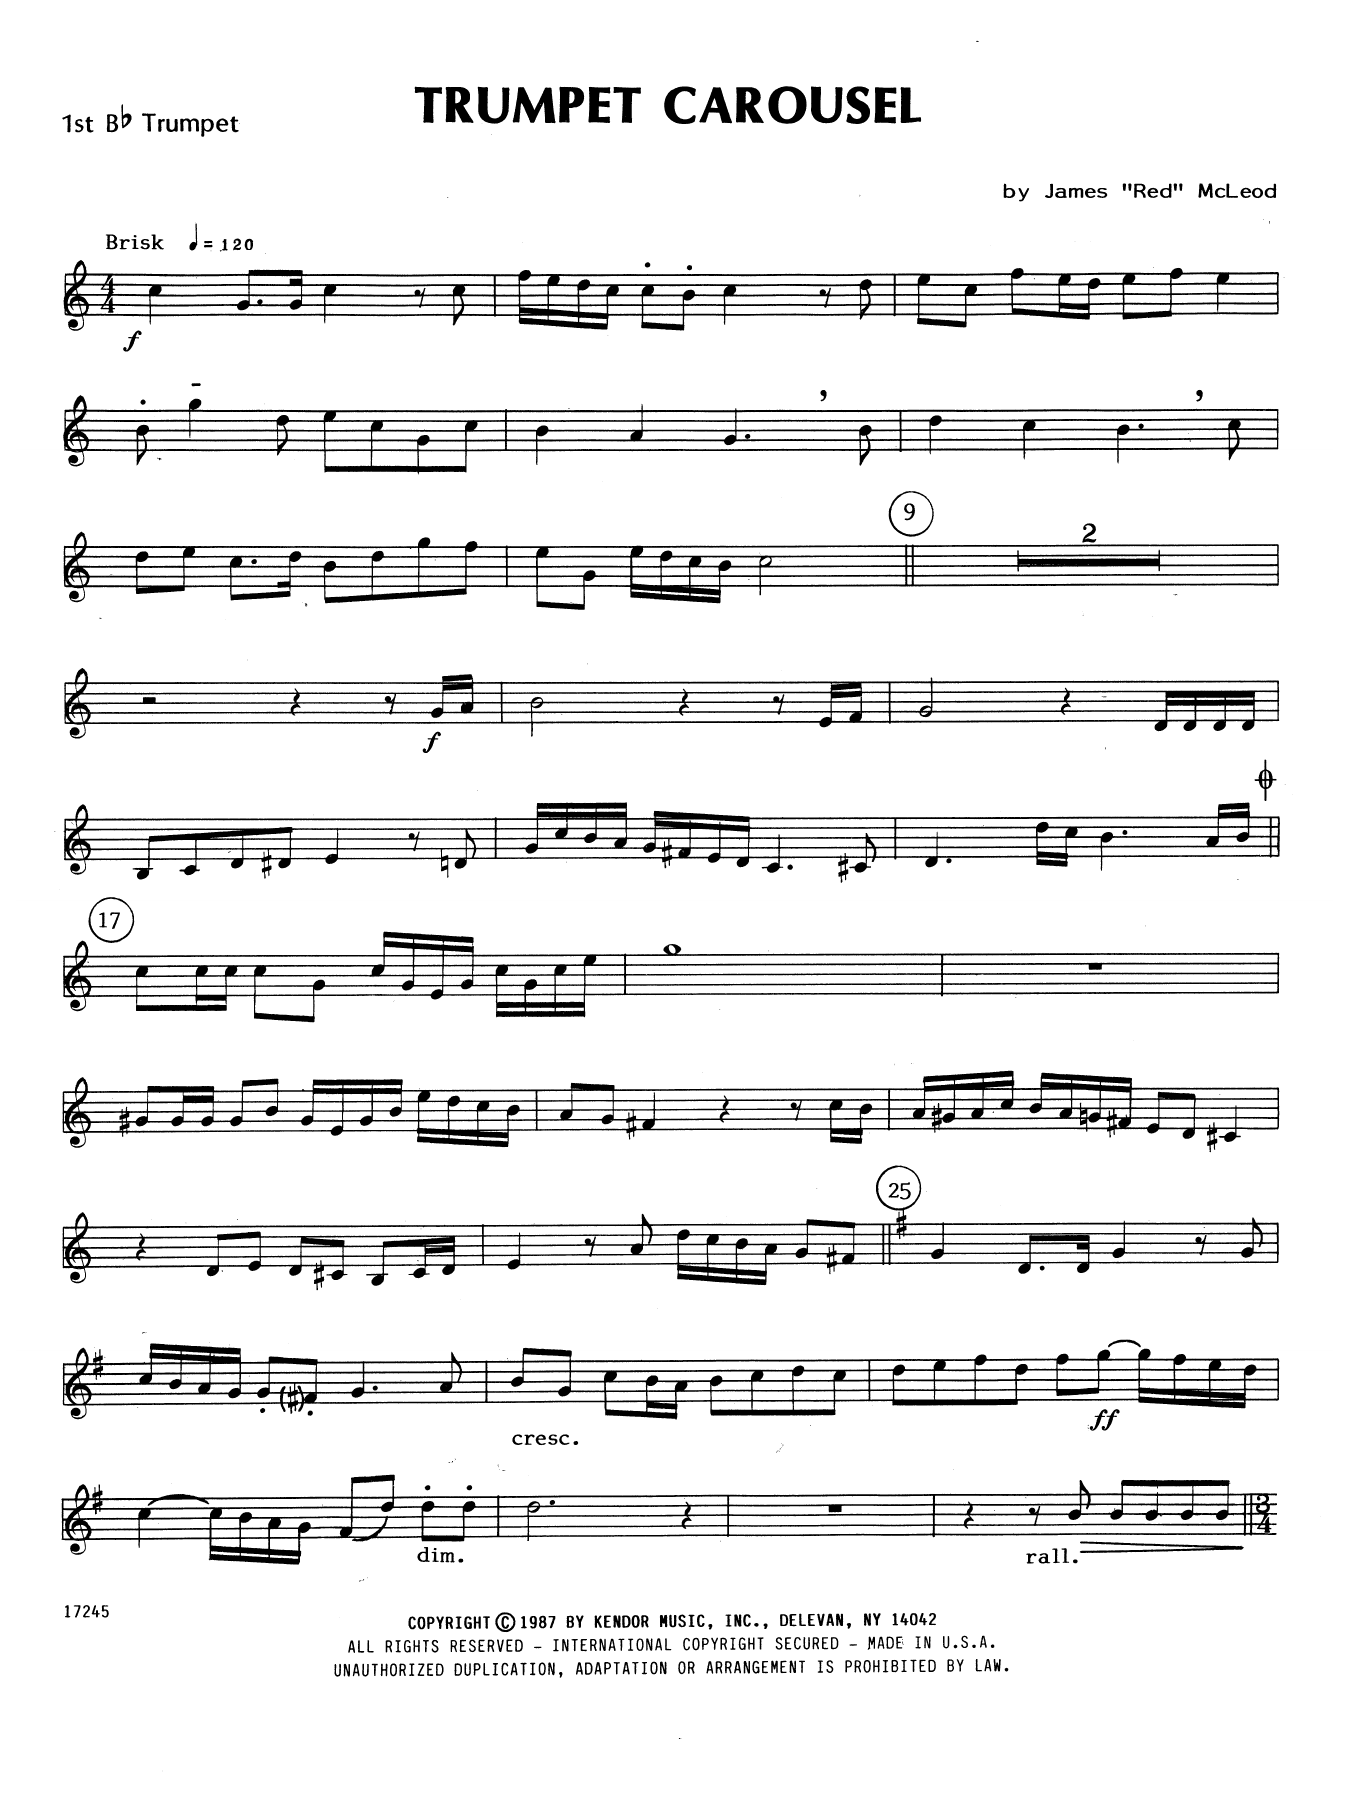 Download James 'Red' McLeod Trumpet Carousel - 1st Bb Trumpet Sheet Music